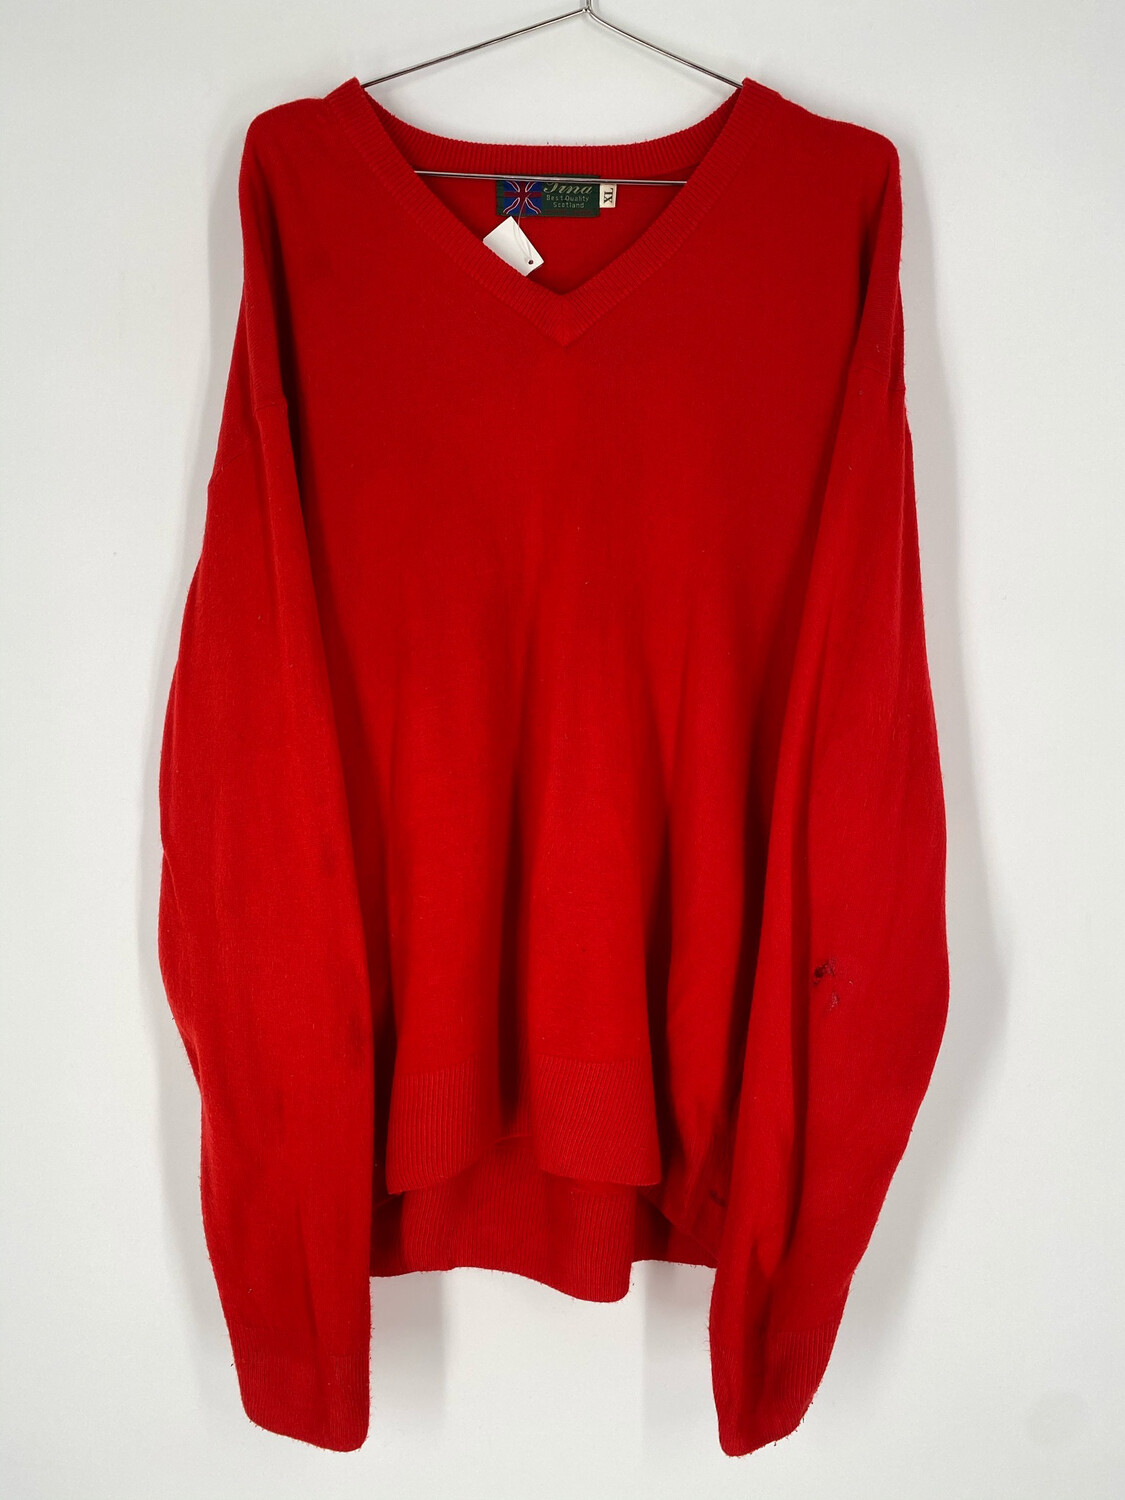 Tina Scotland Vintage V-Neck Bright Red Sweater Size XL